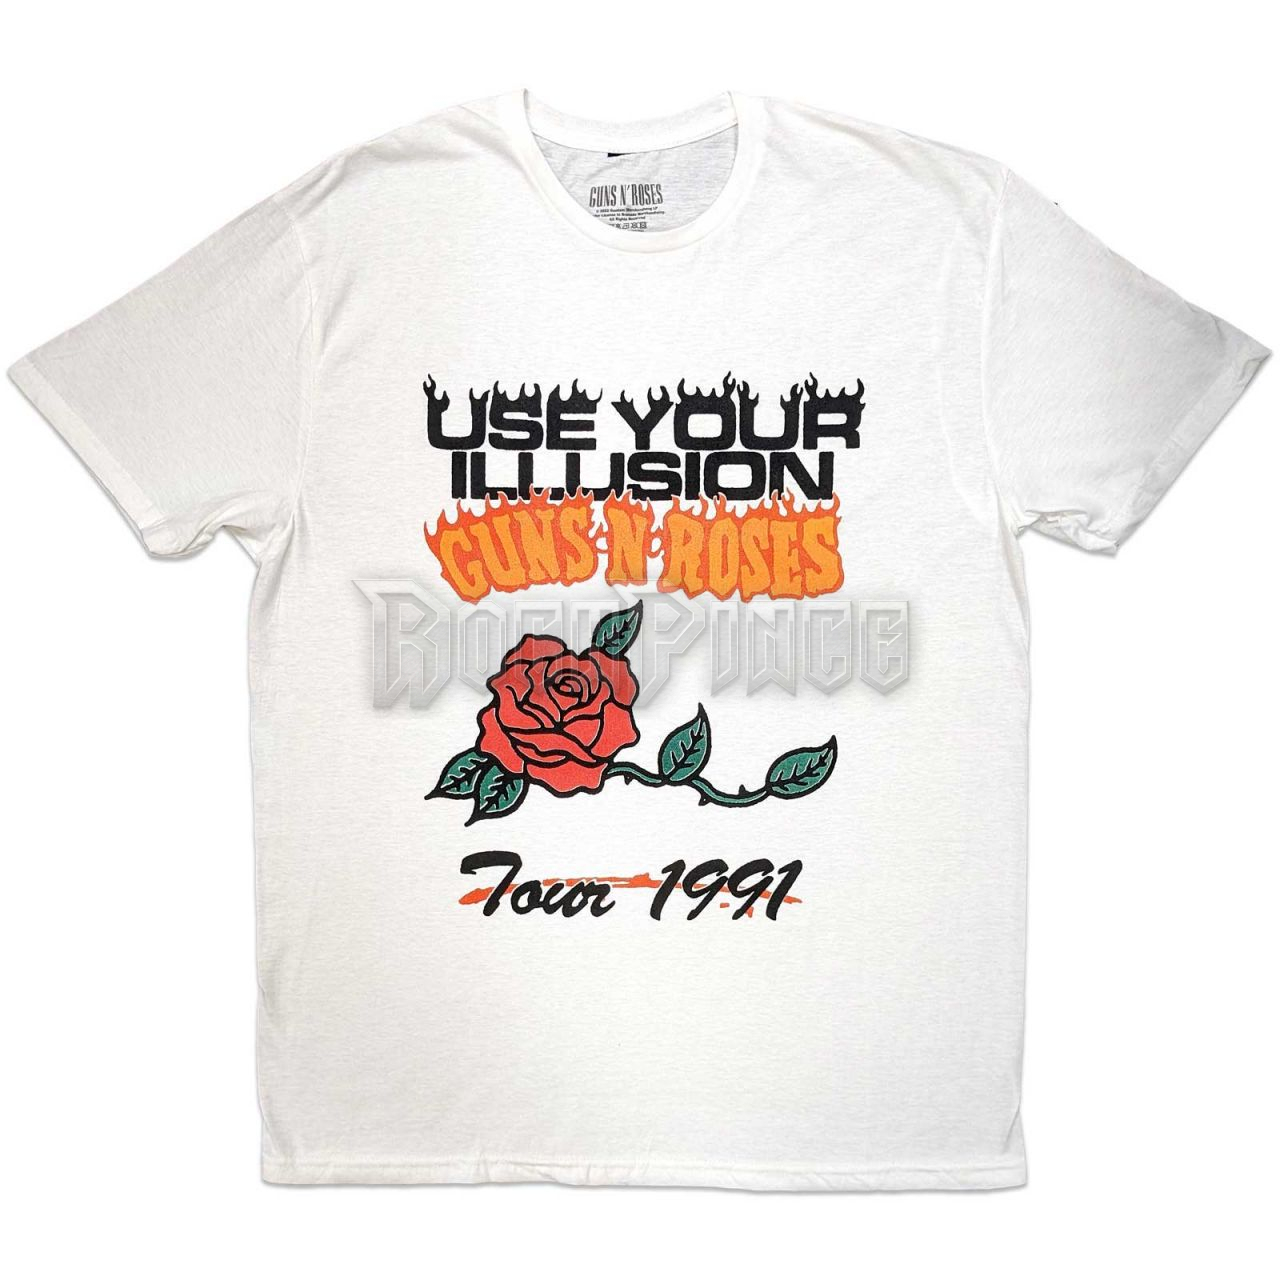 Guns N' Roses - Use Your Illusion Tour 1991 - unisex póló - GNRTS146MW